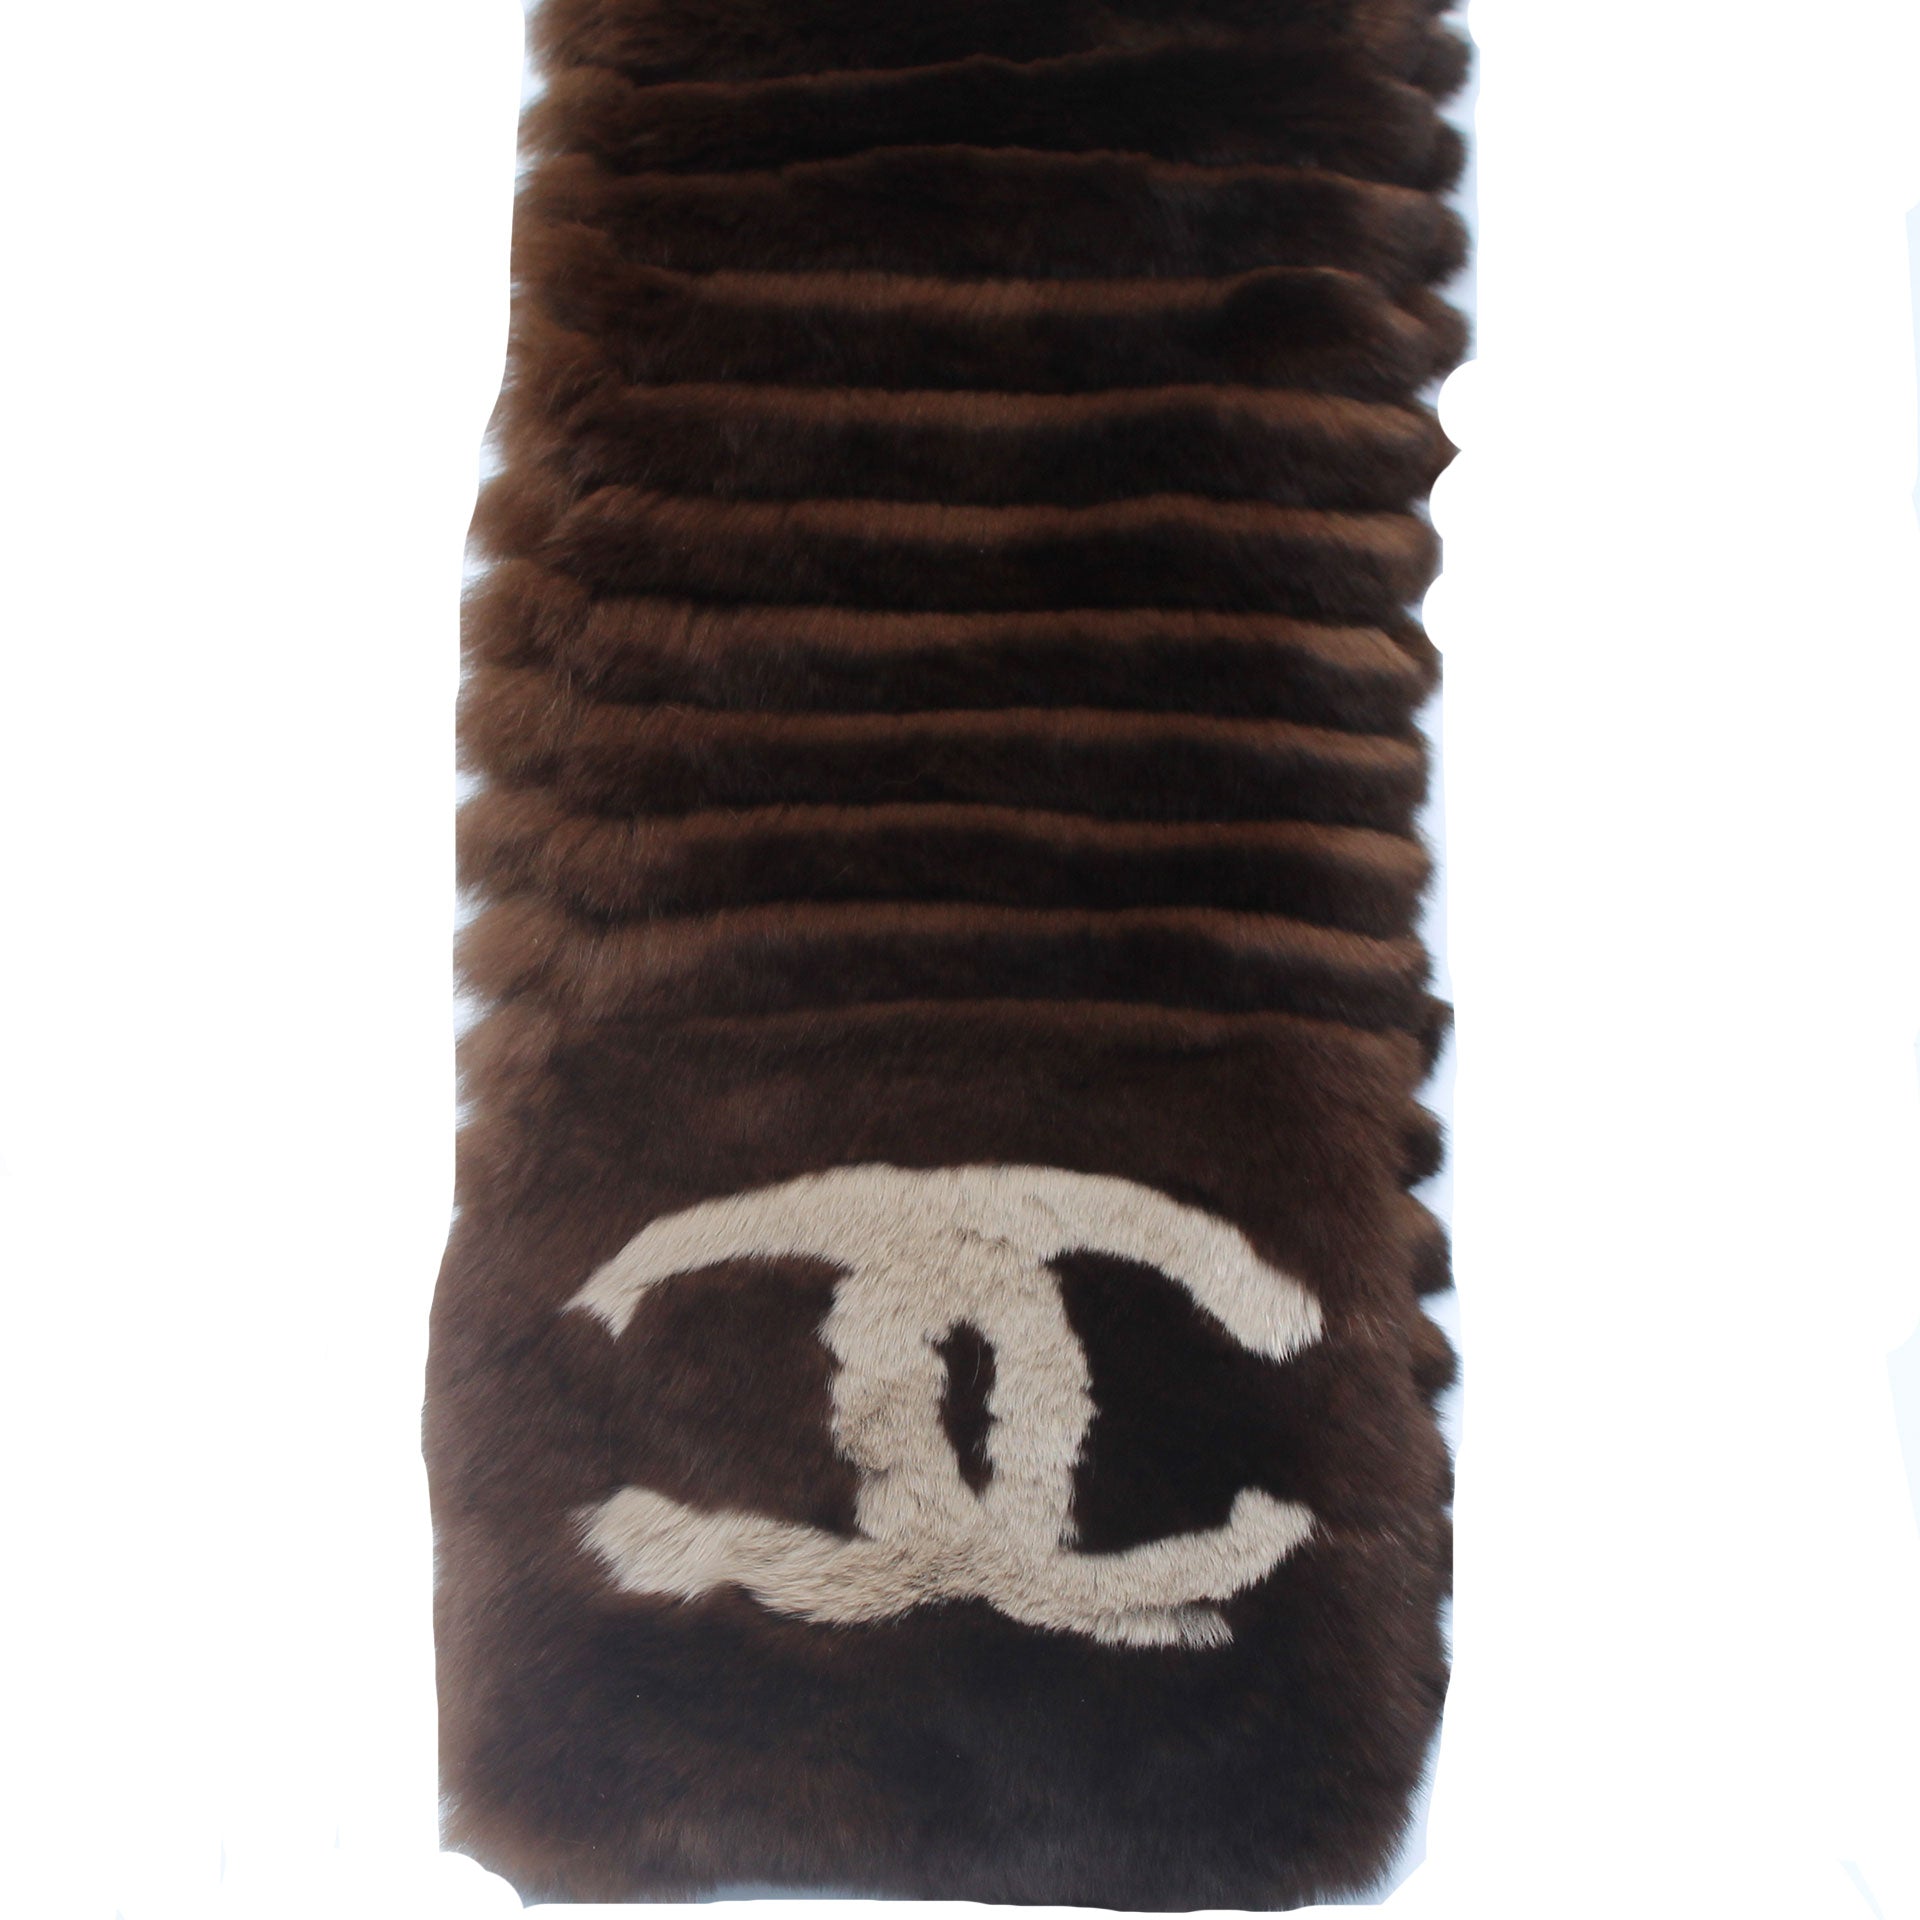 Chanel Fur Orylag Jacket